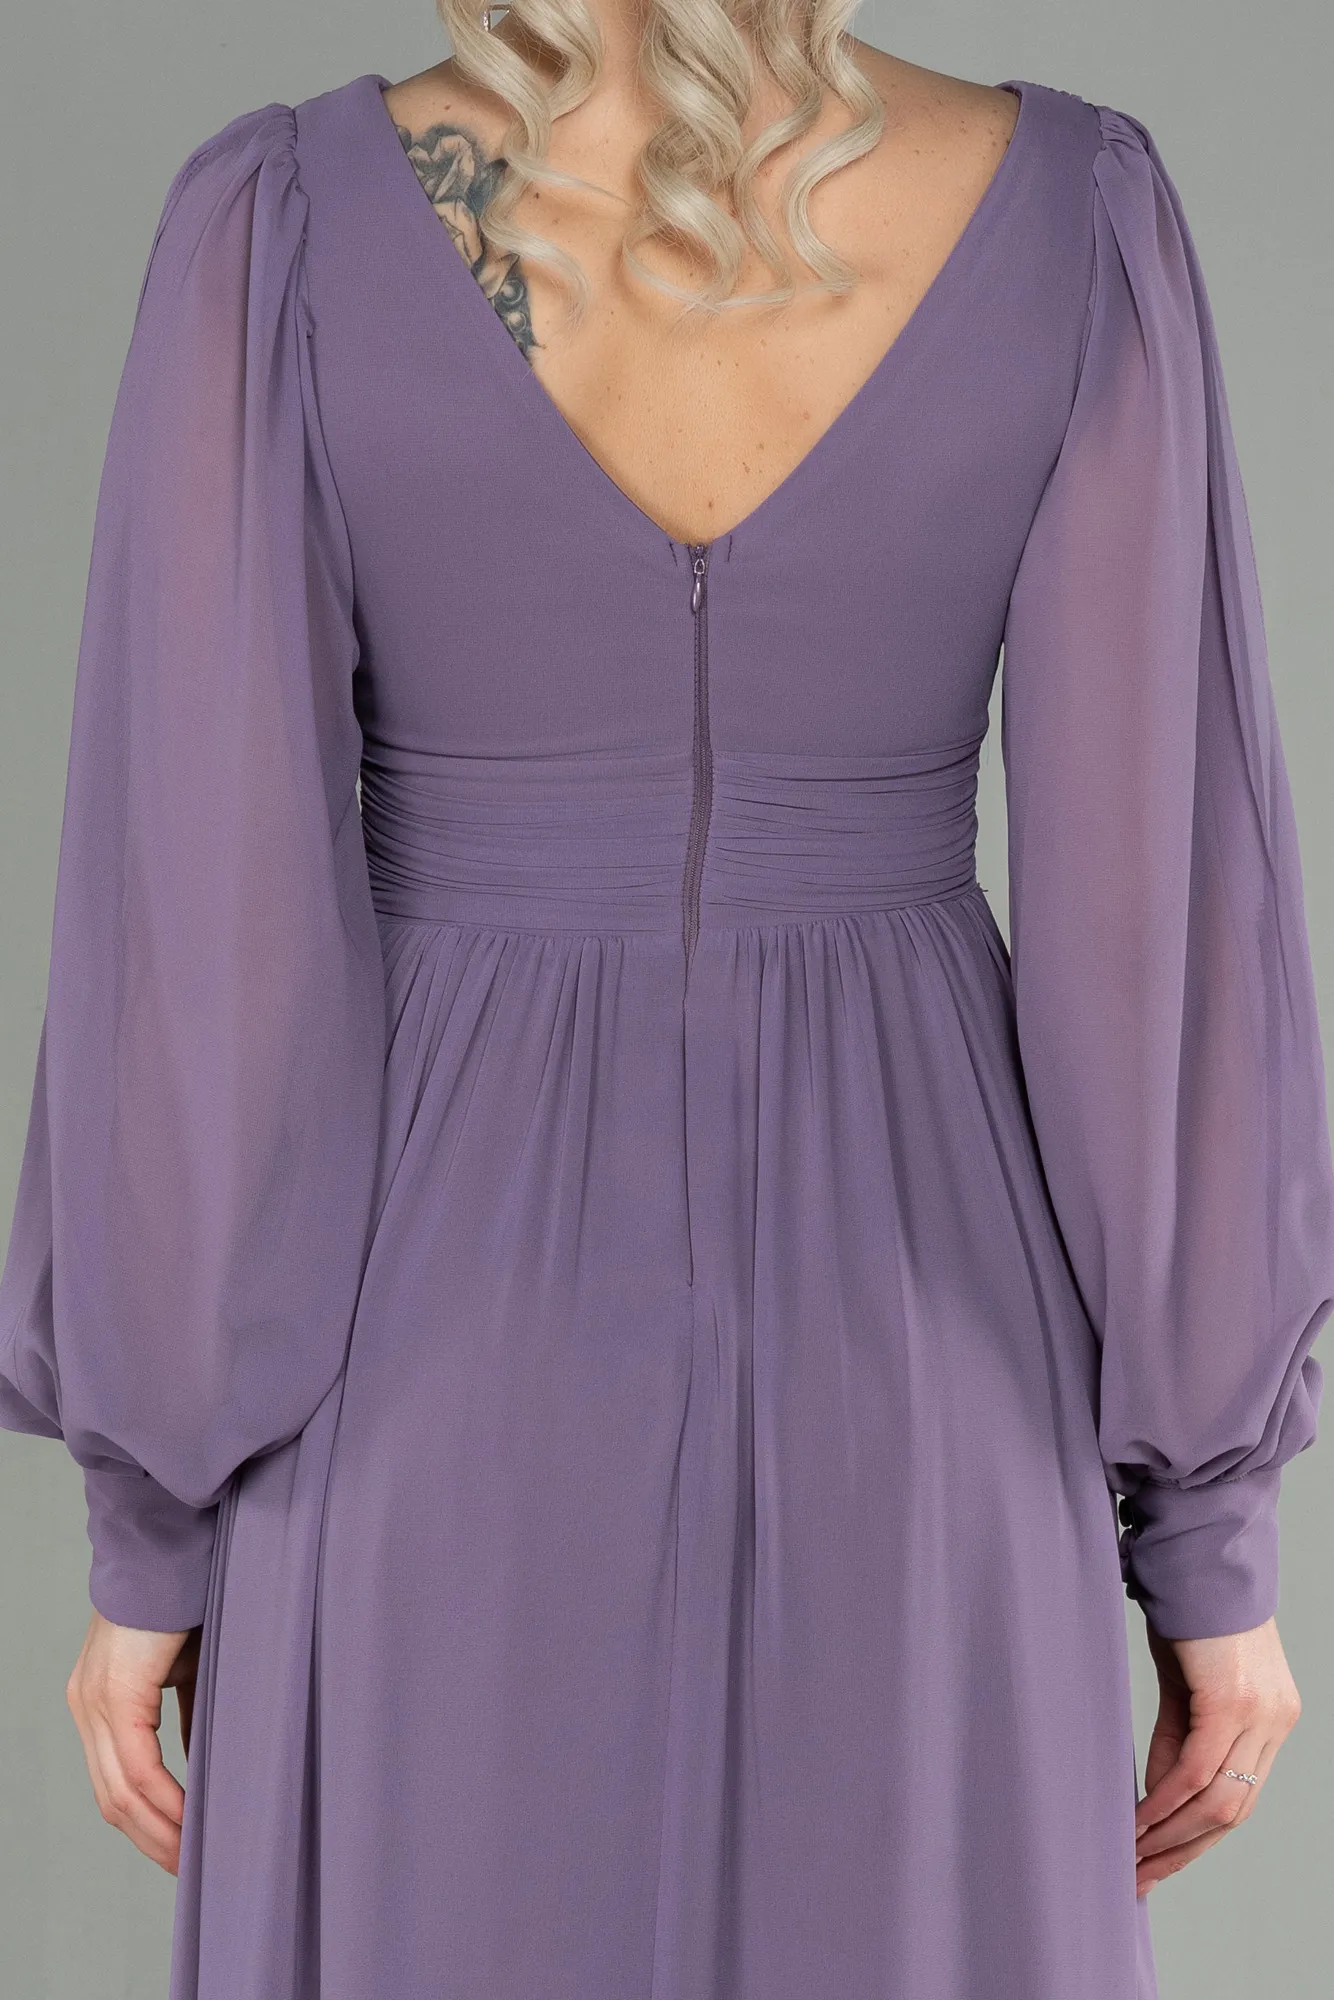 Lavender-Long Chiffon Evening Dress ABU1702